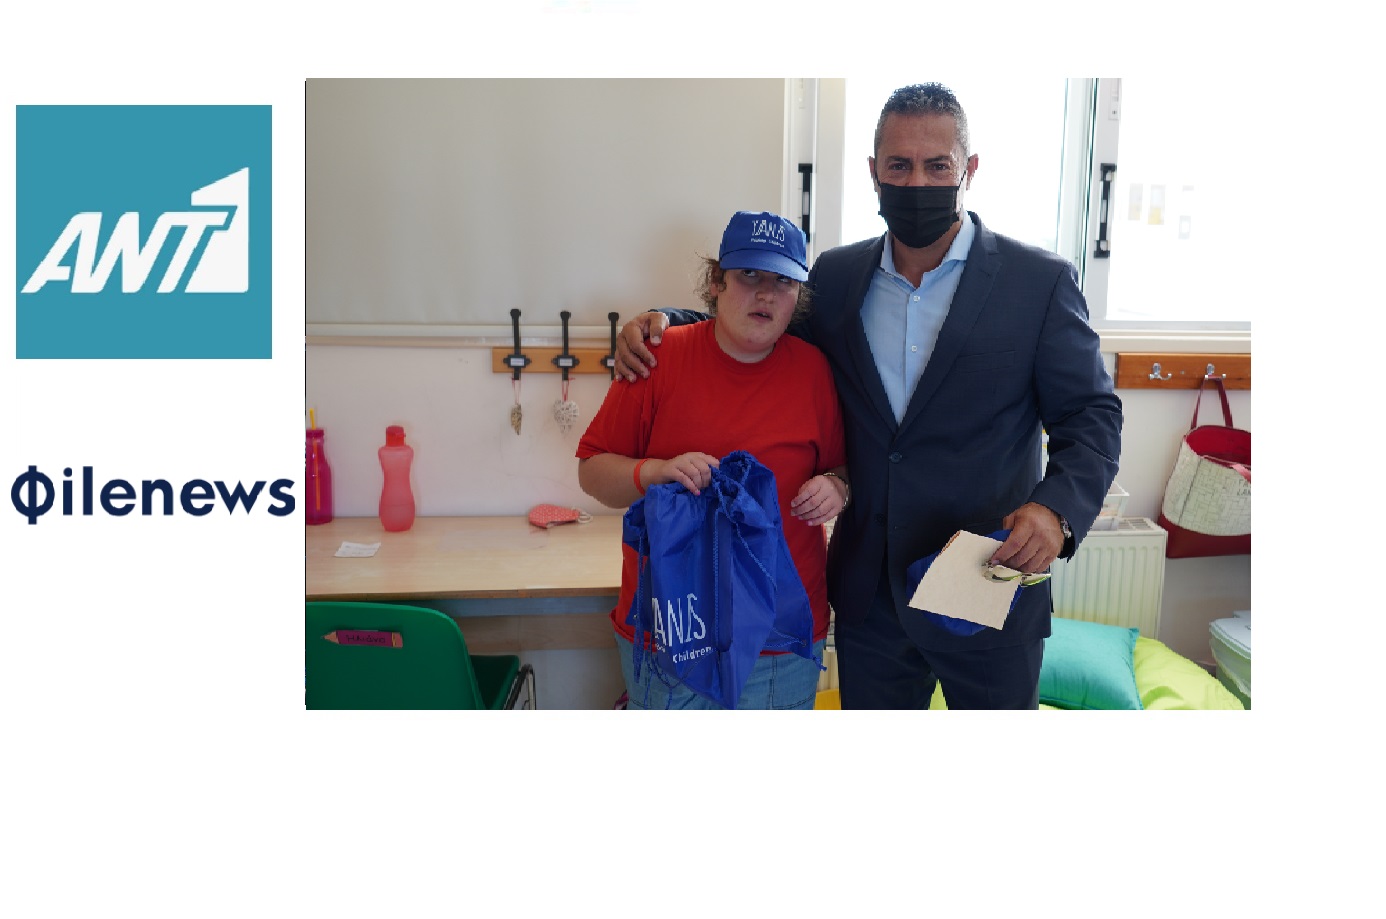 ANT1 & Philenews Reports On The Foundation’s Founder John Christodoulou Visit To 3rd Kaimaki Primary School & Nicosia Special Needs School